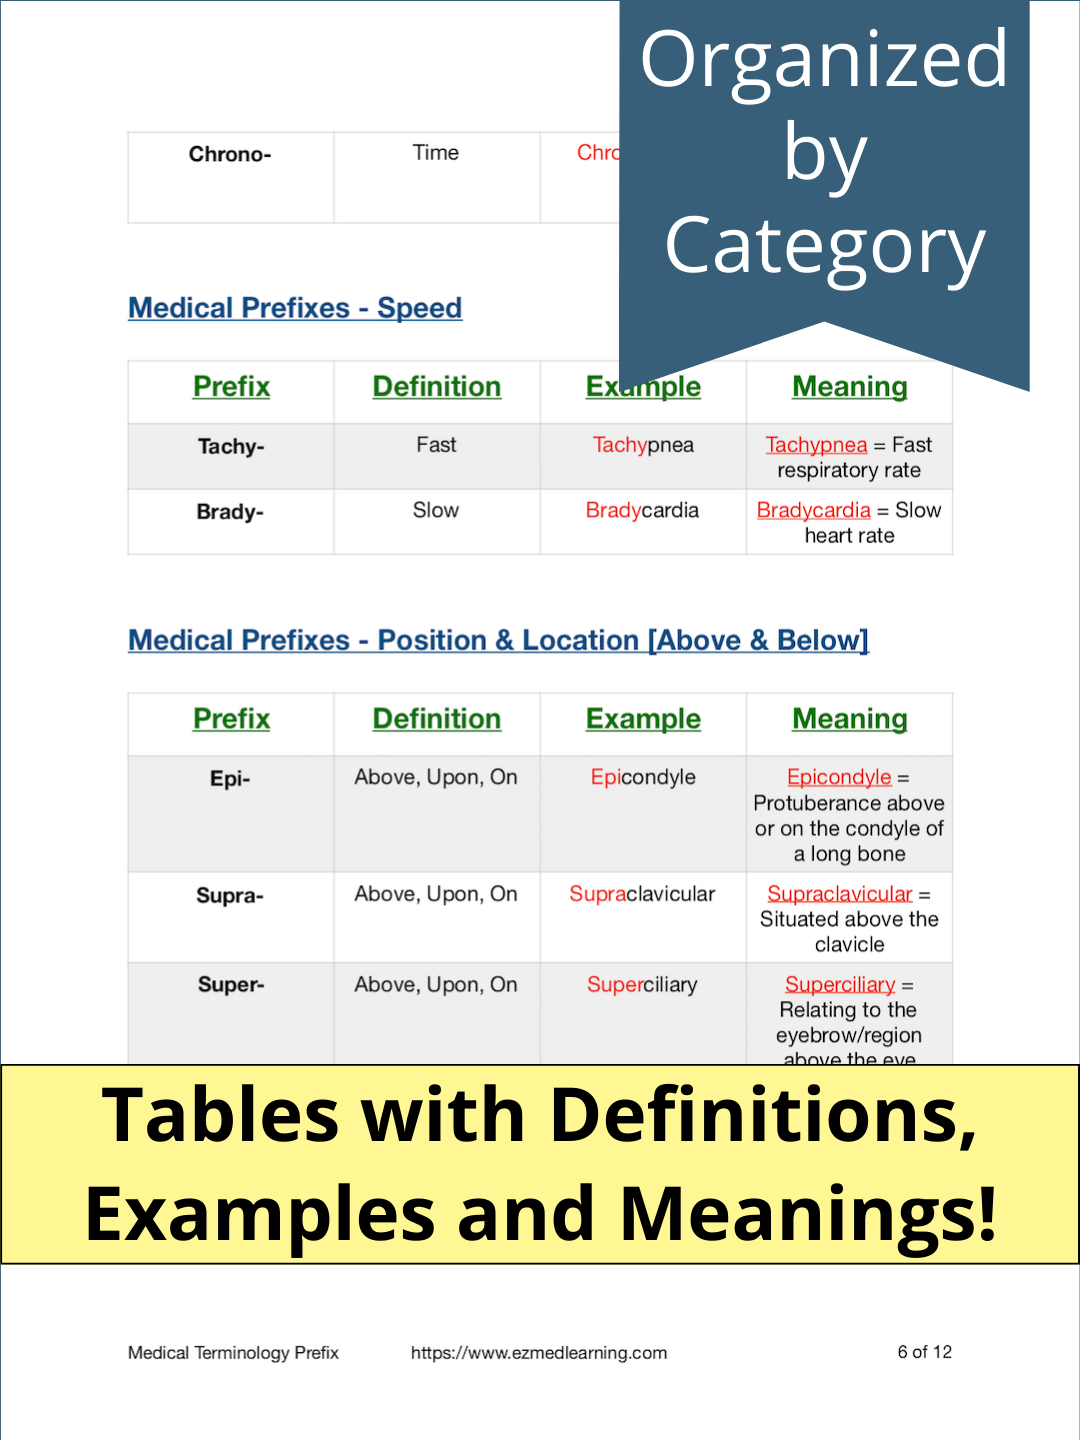 Prefixes: Medical Terminology [Study Guide]